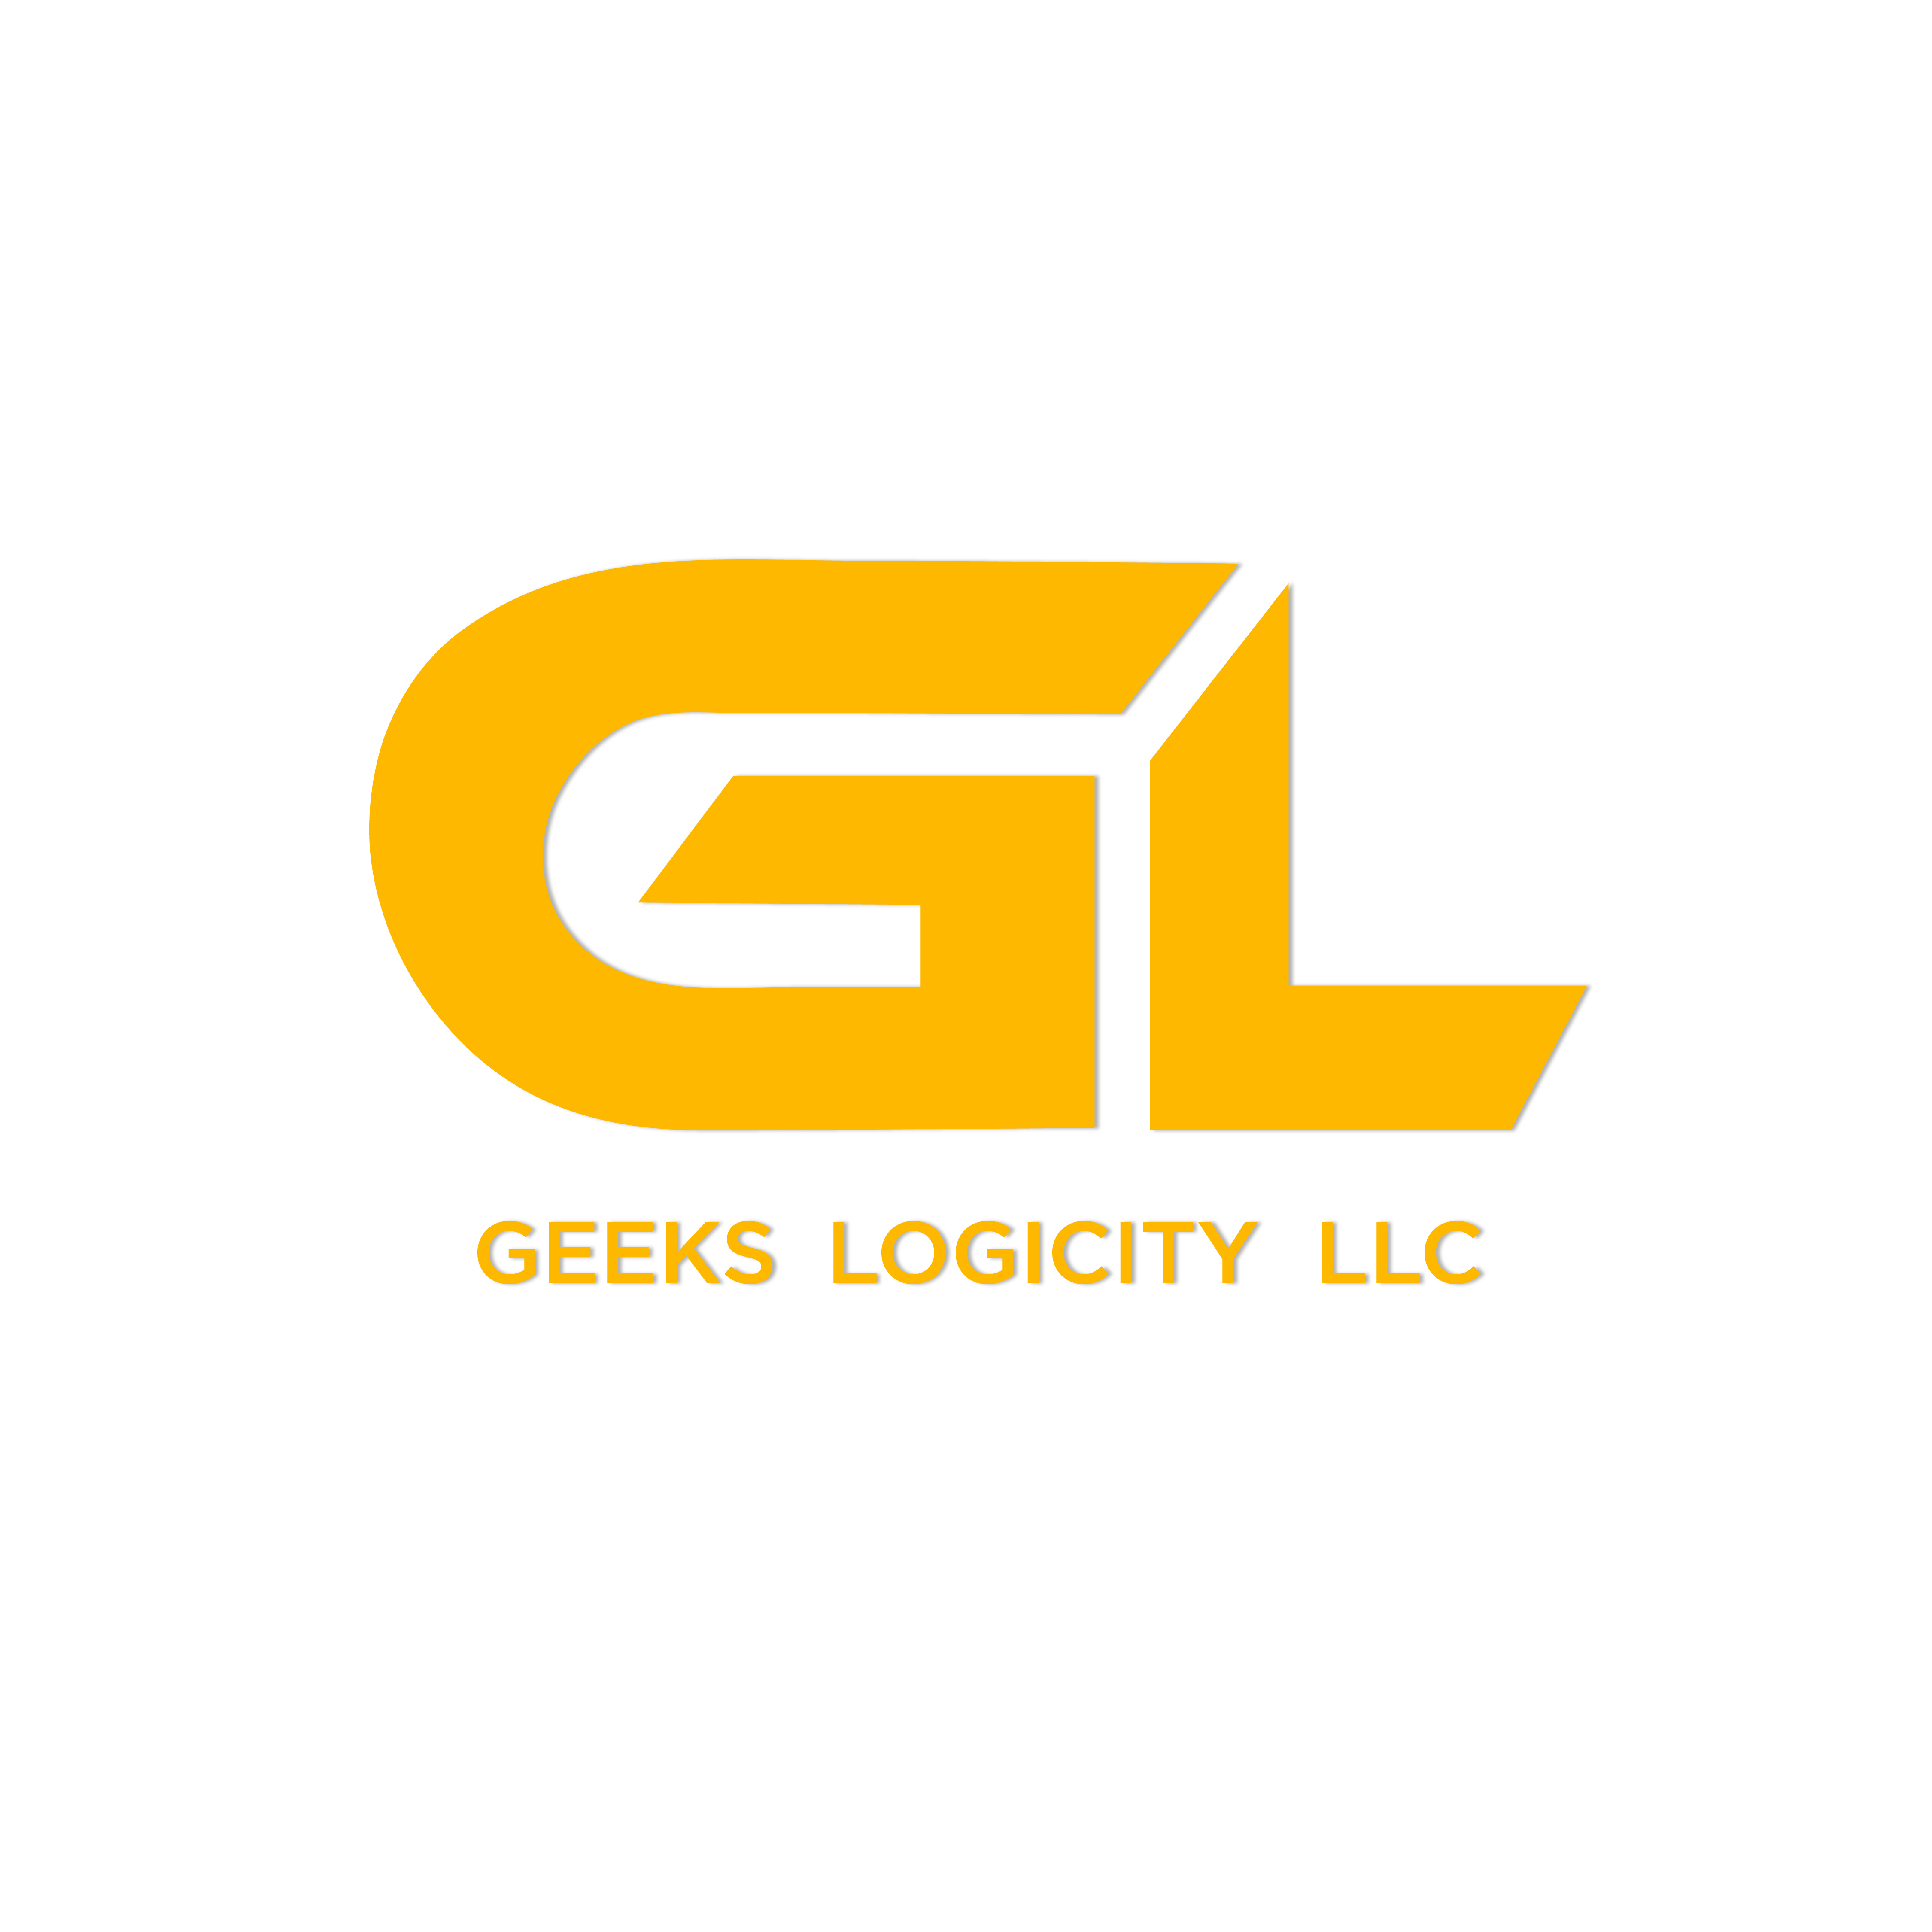 Business logo of Geeks Logicity